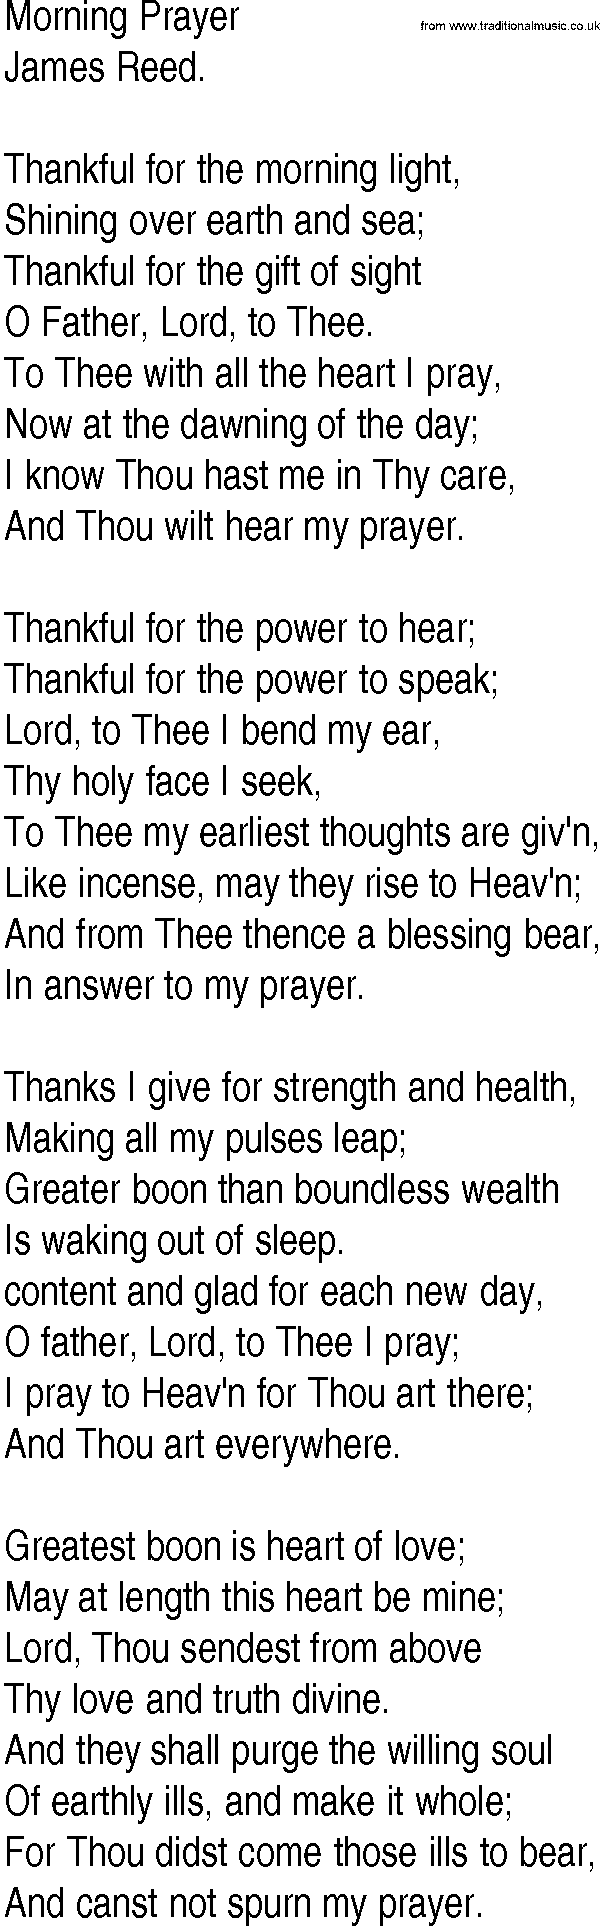 Hymn and Gospel Song: Morning Prayer by James Reed lyrics